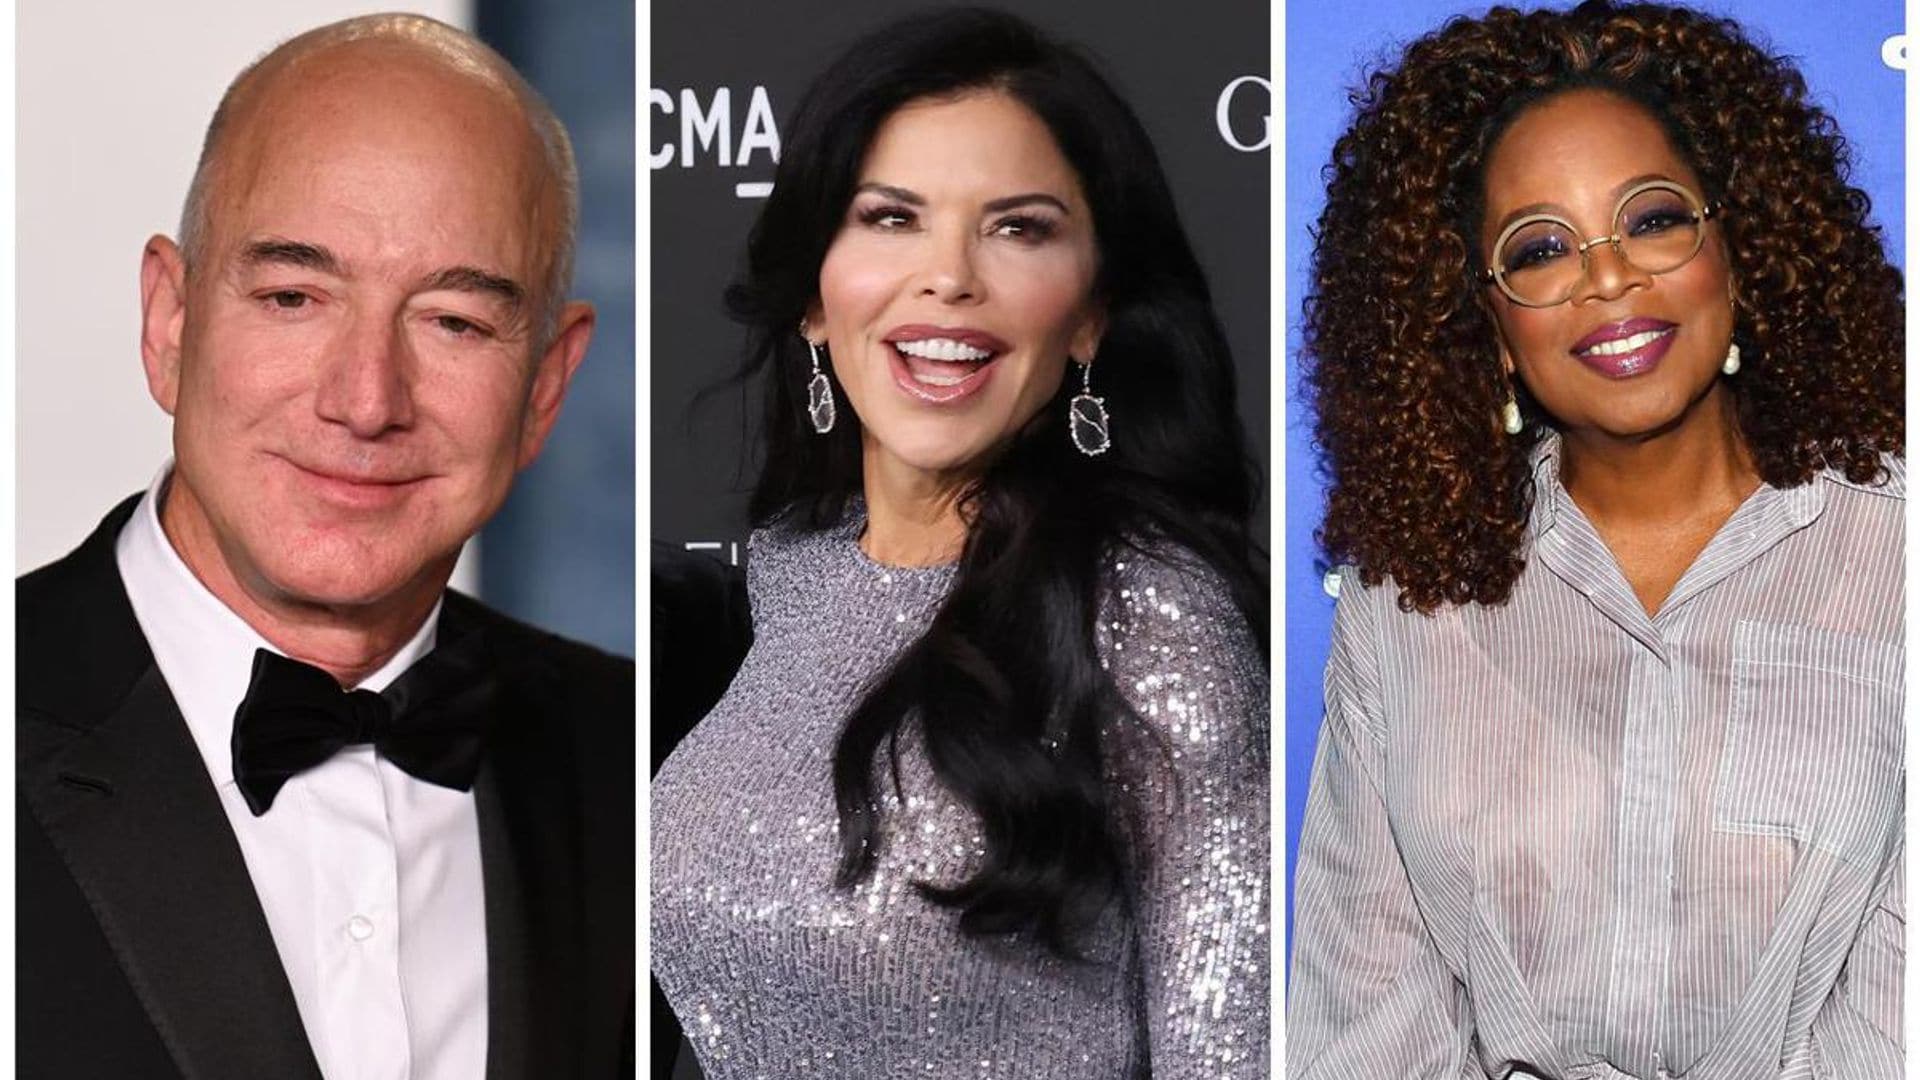 Jeff Bezos and Lauren Sánchez welcome Oprah Winfrey aboard their luxurious yacht